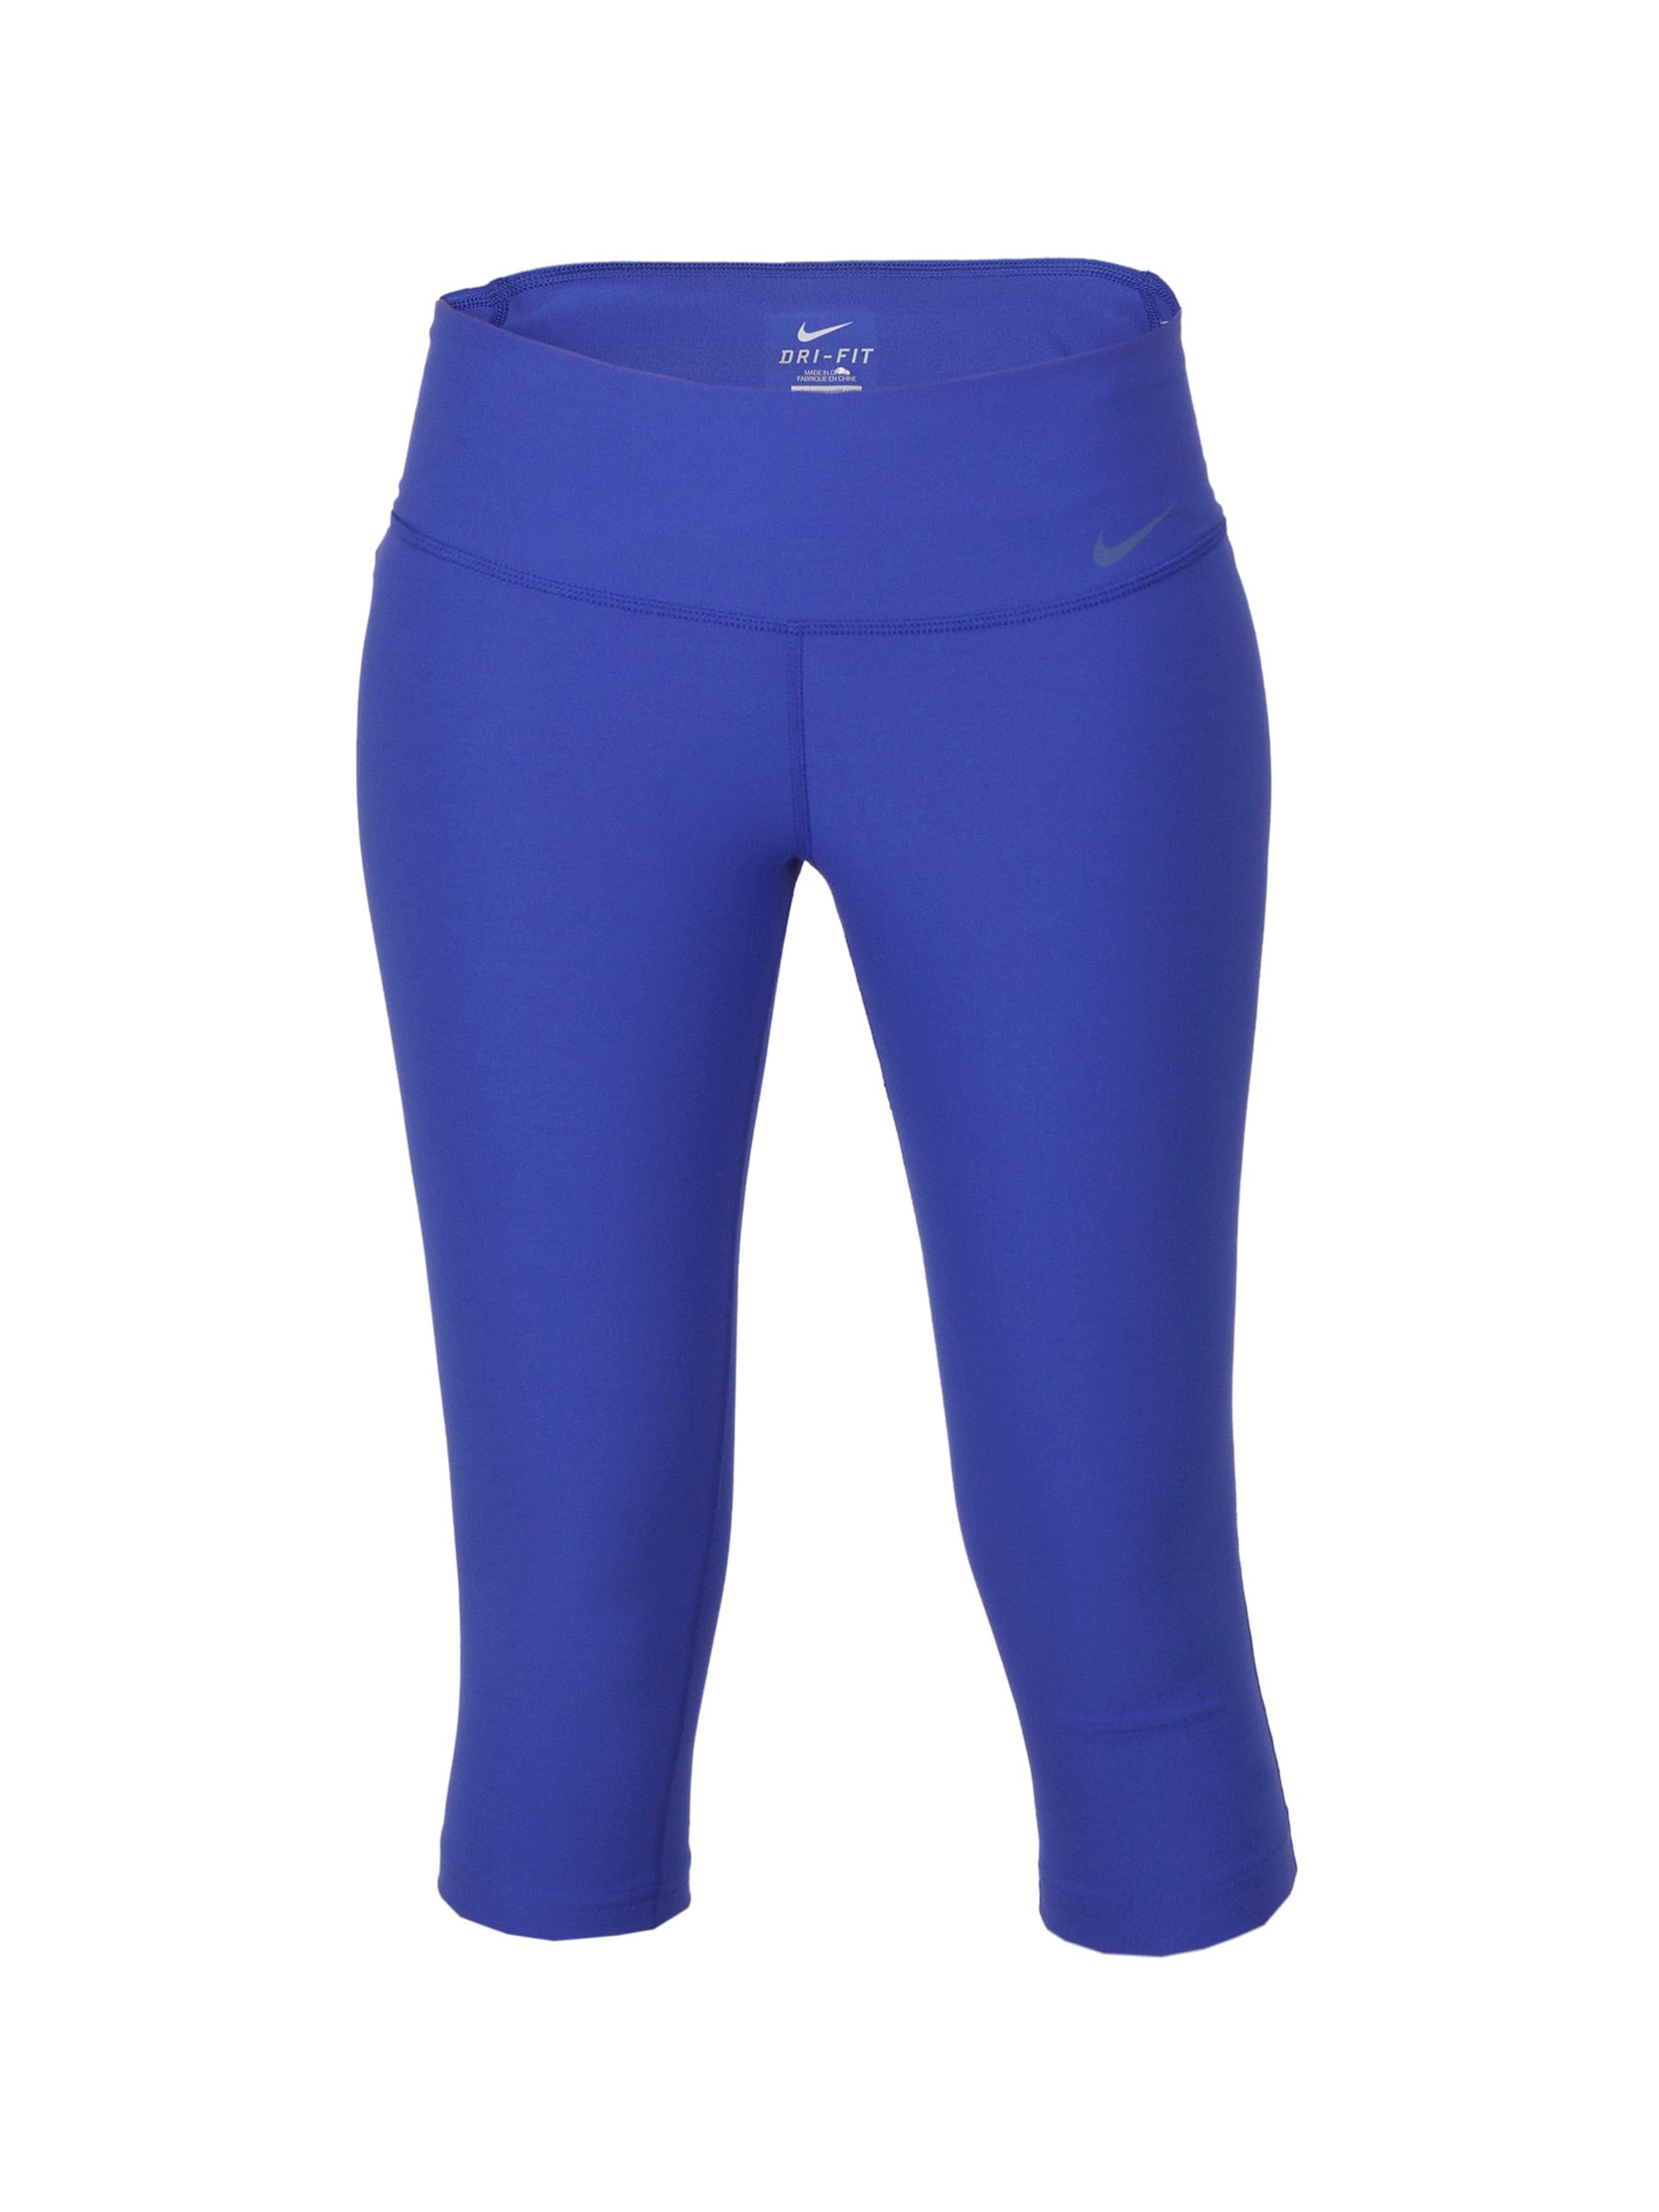 Nike Women Legend Tight Blue Capris